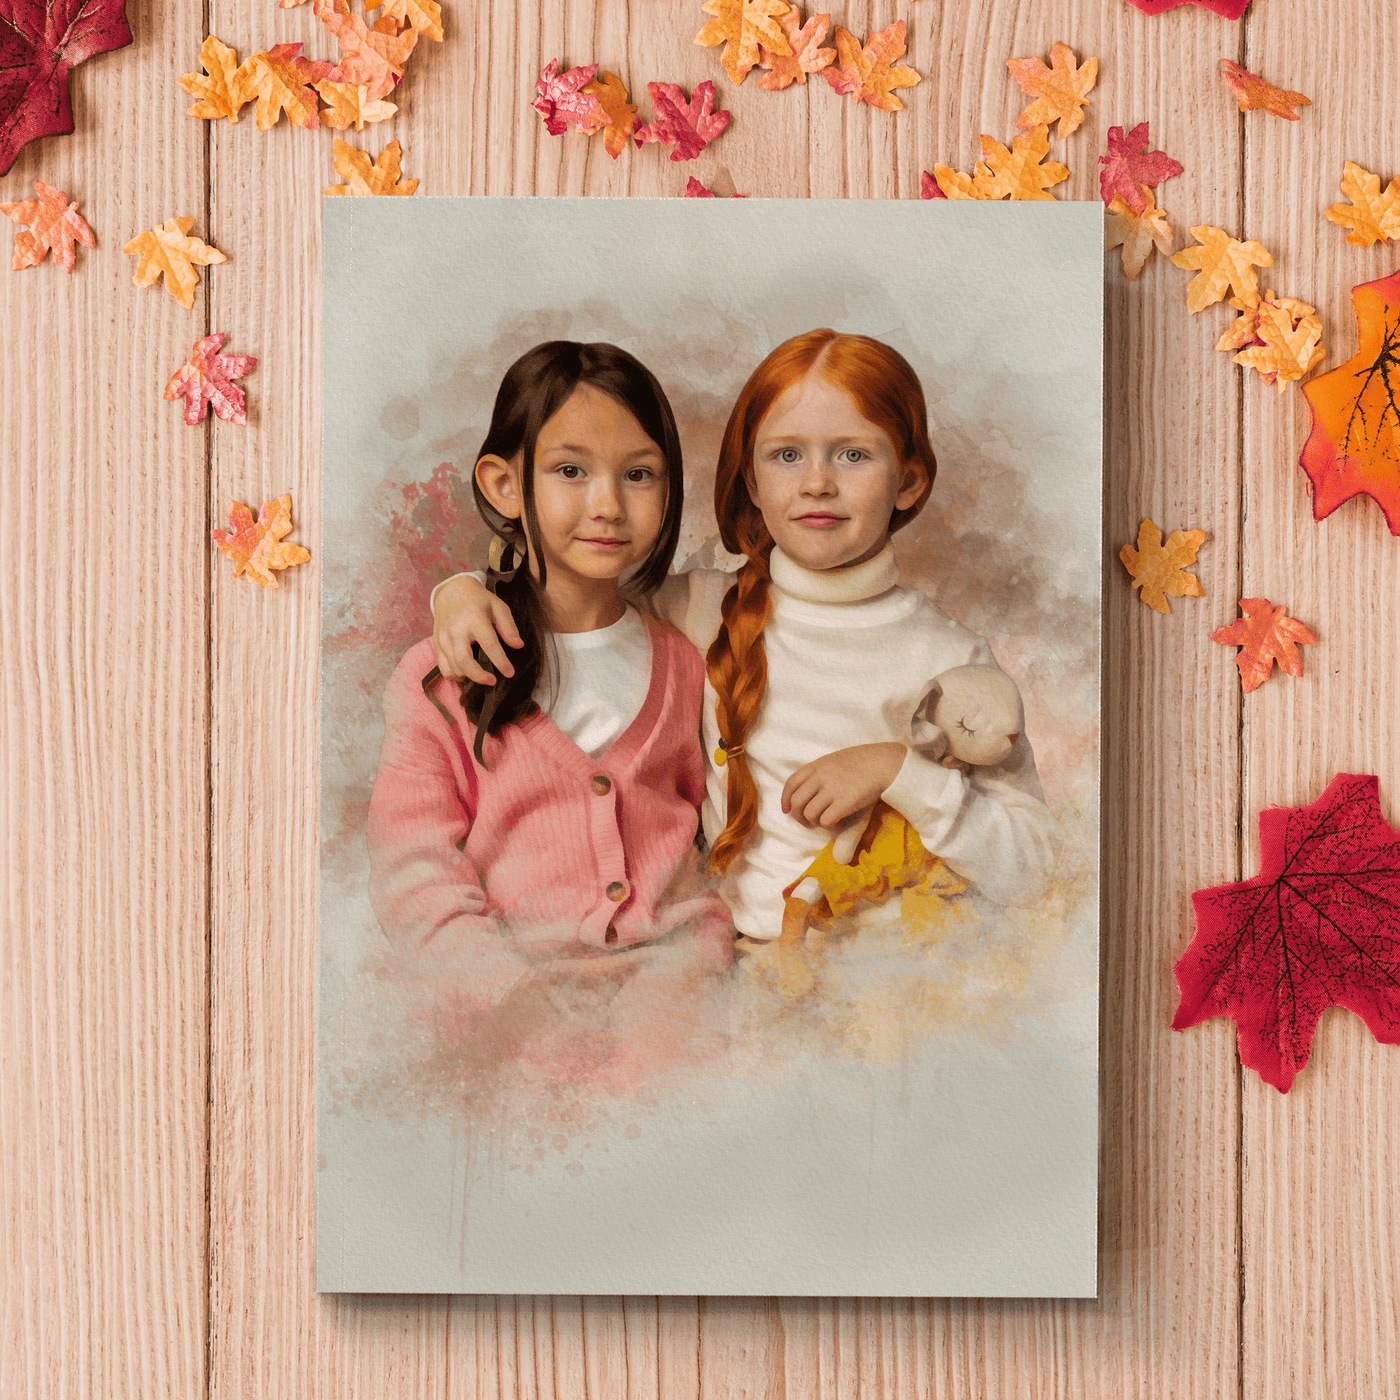 watercolor children portrait of a lovely two female children